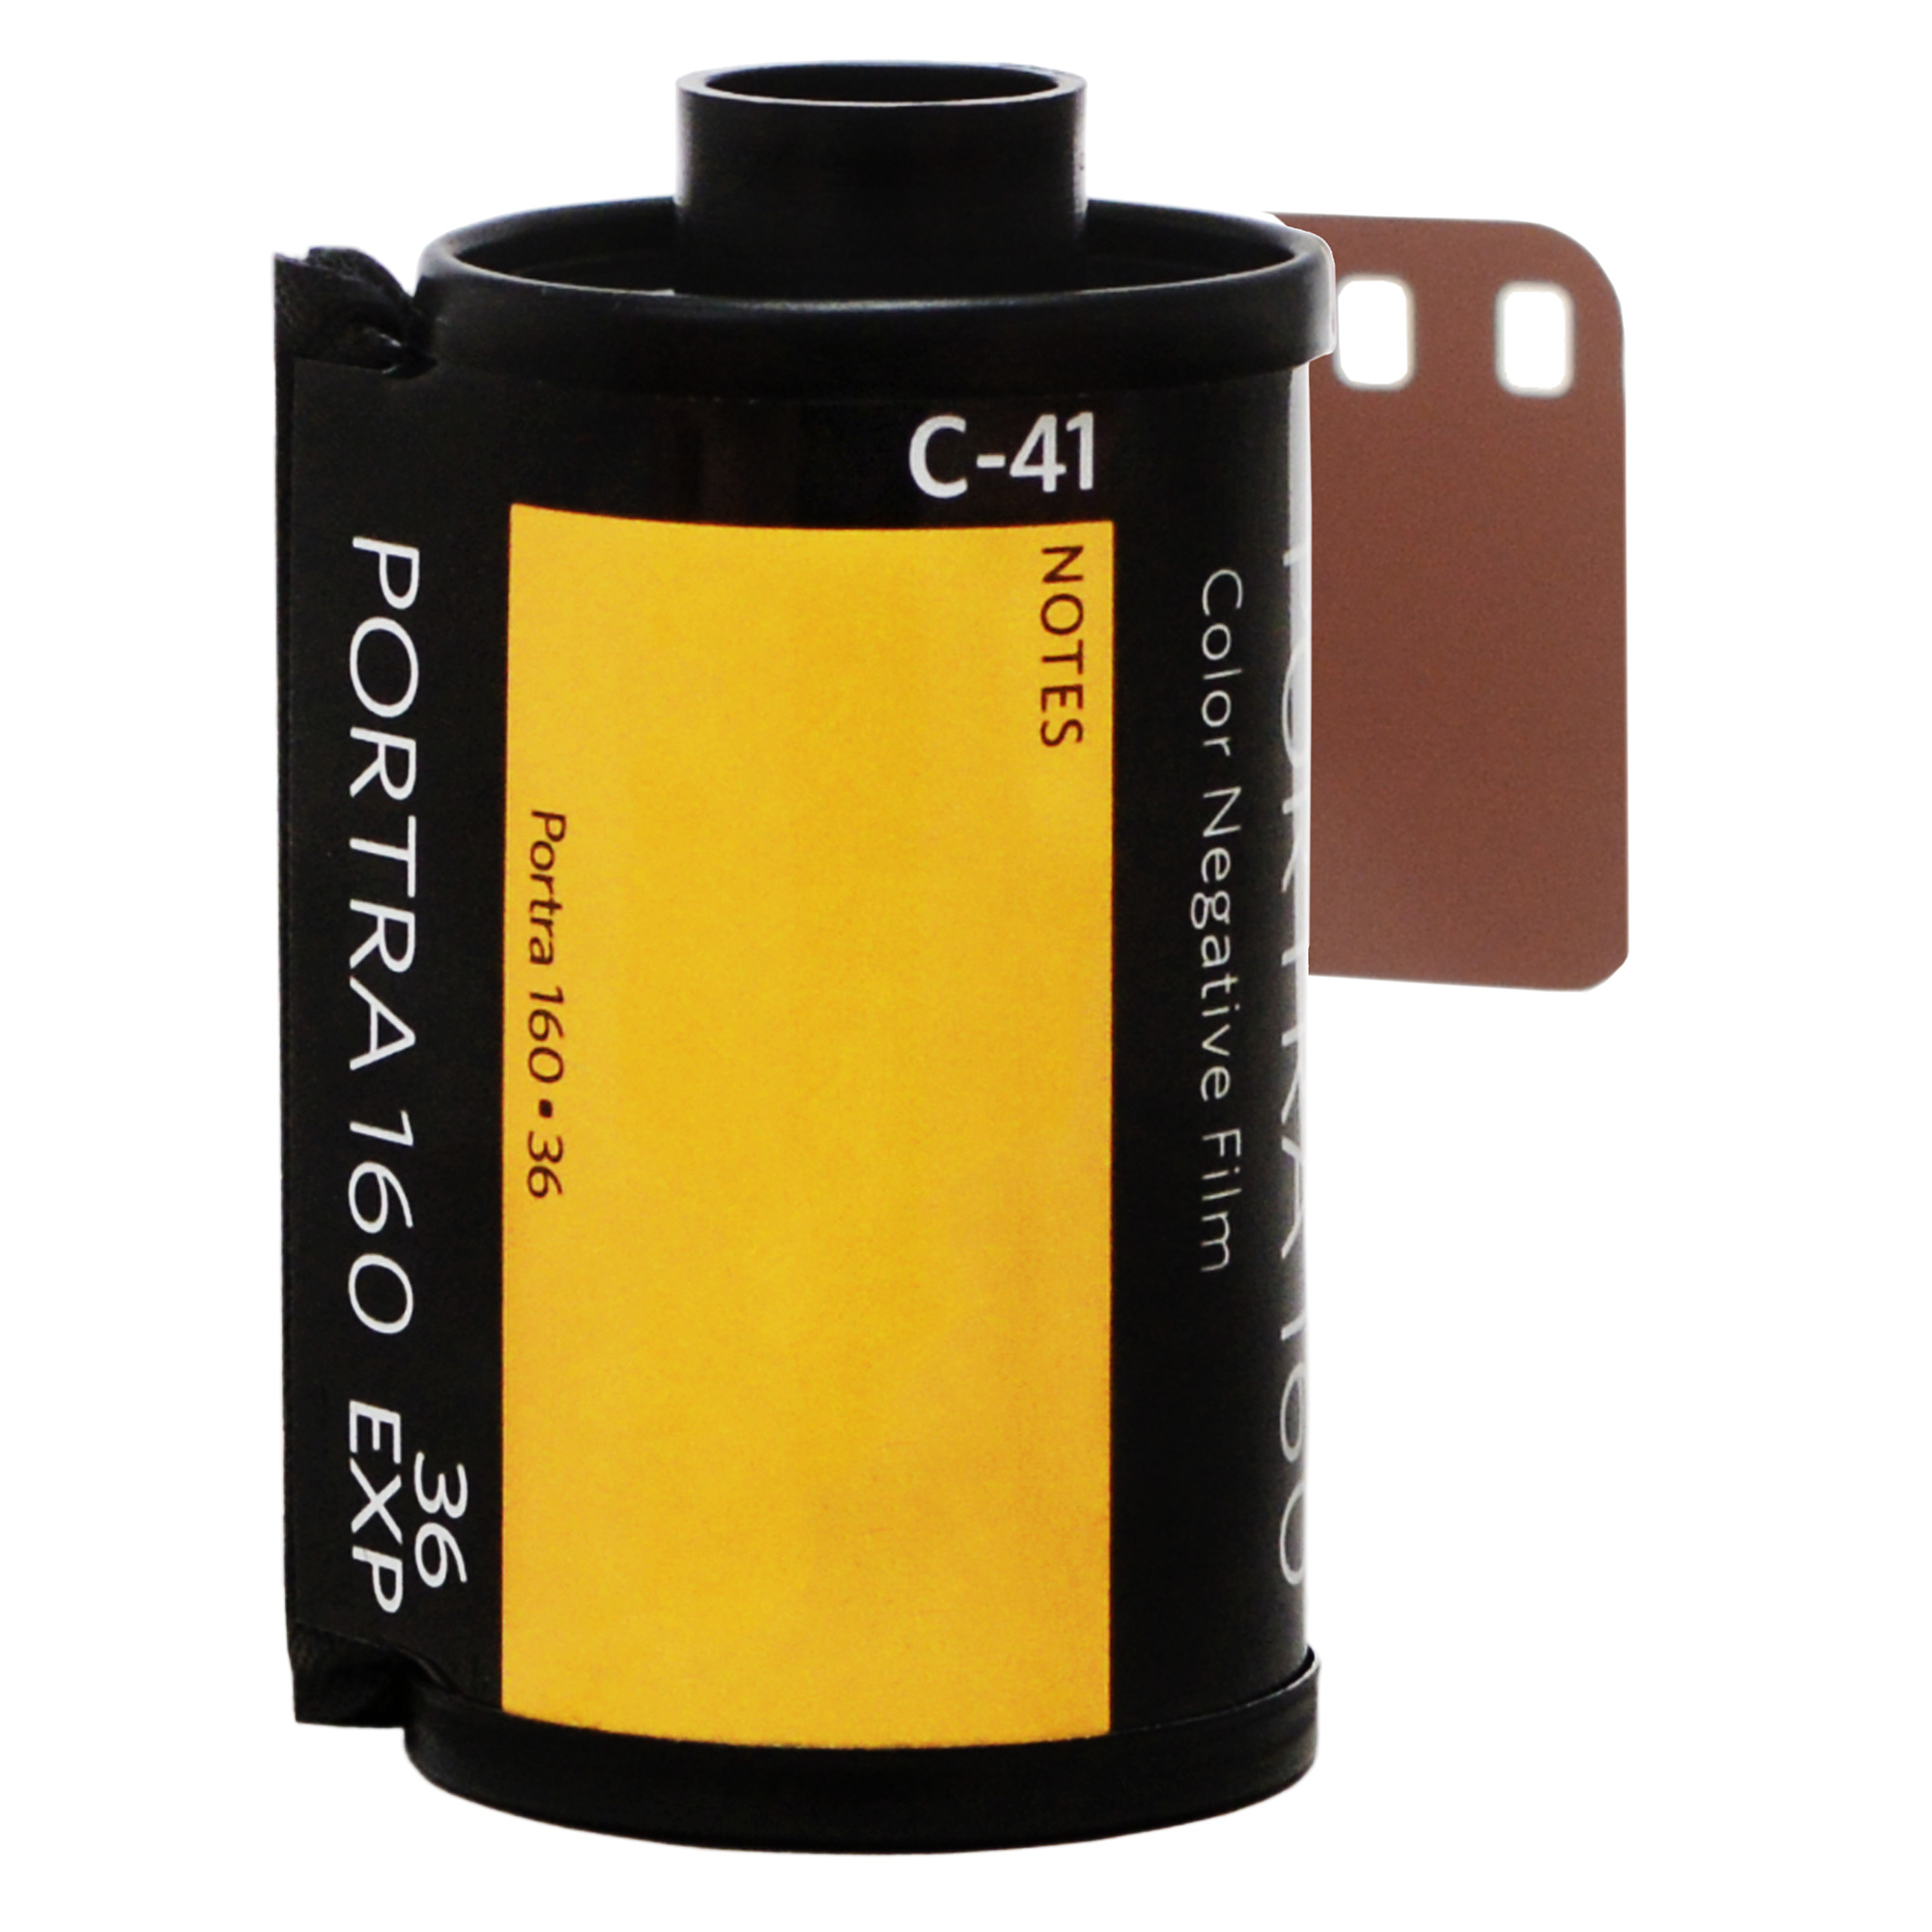 Kodak Portra 160-36 Professional Color Negative Film (35mm Roll Film, 36 Exposures, Single Roll)